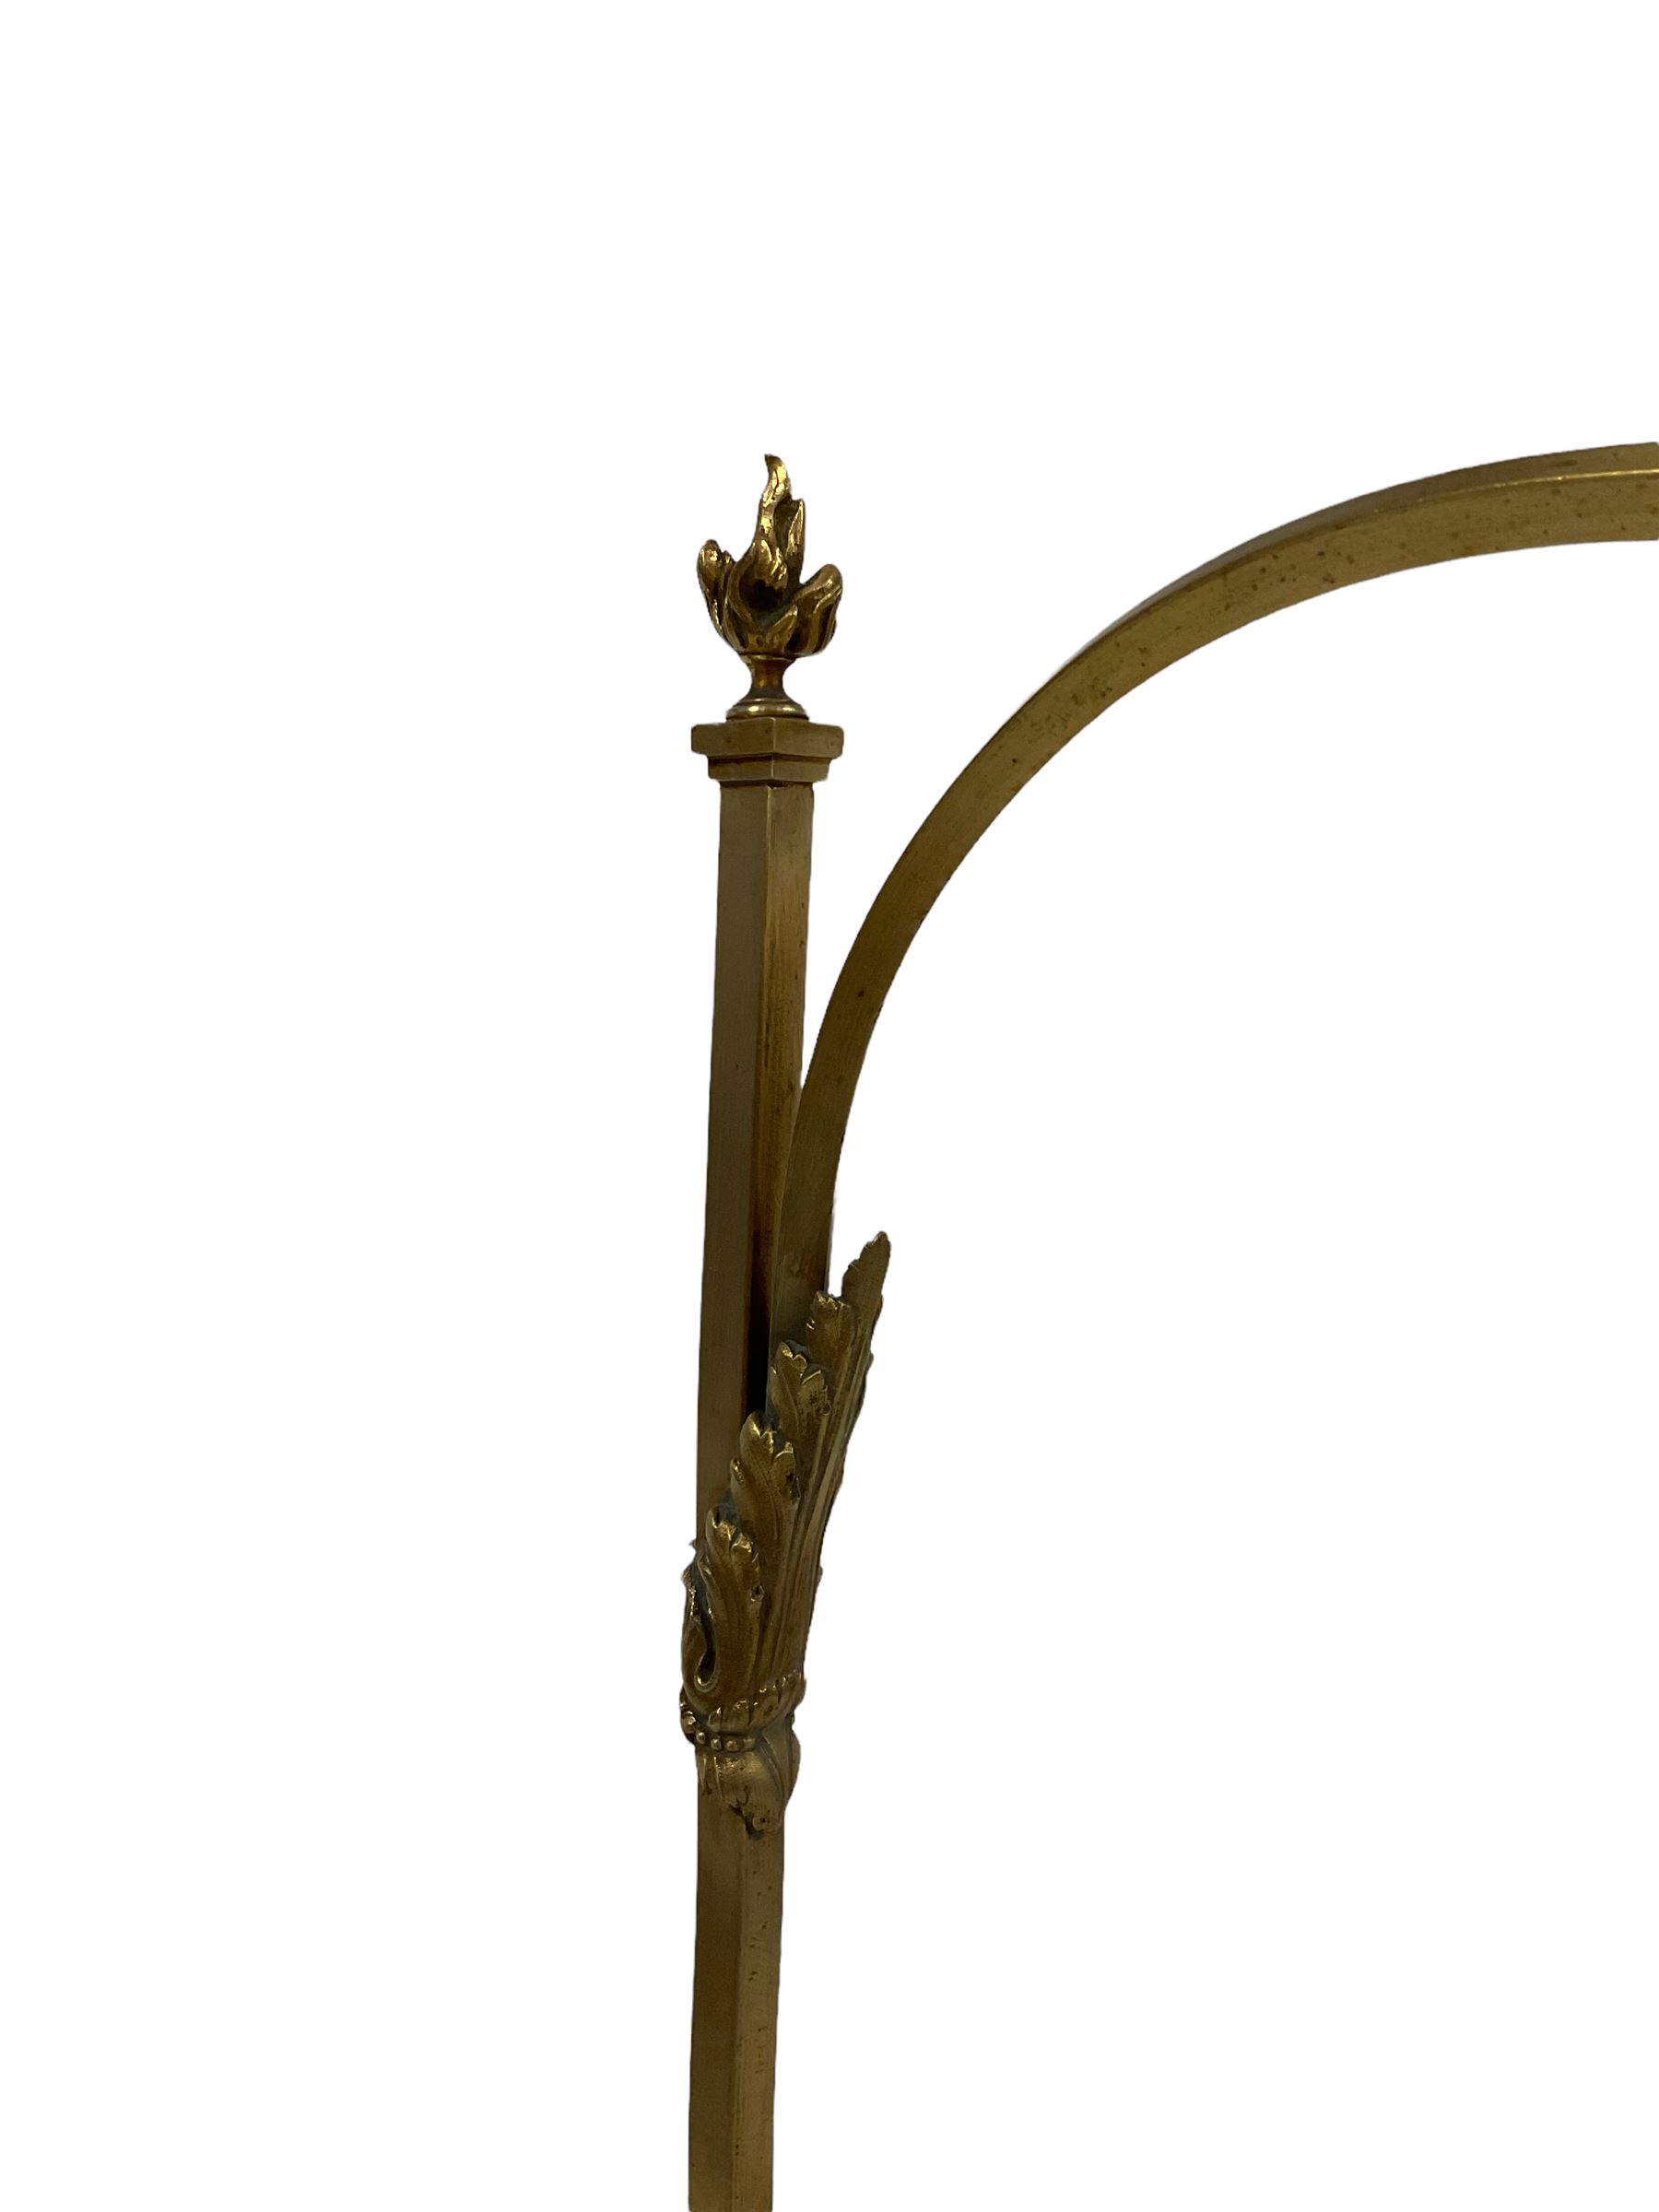 Brass and mahogany lamp - Image 3 of 3